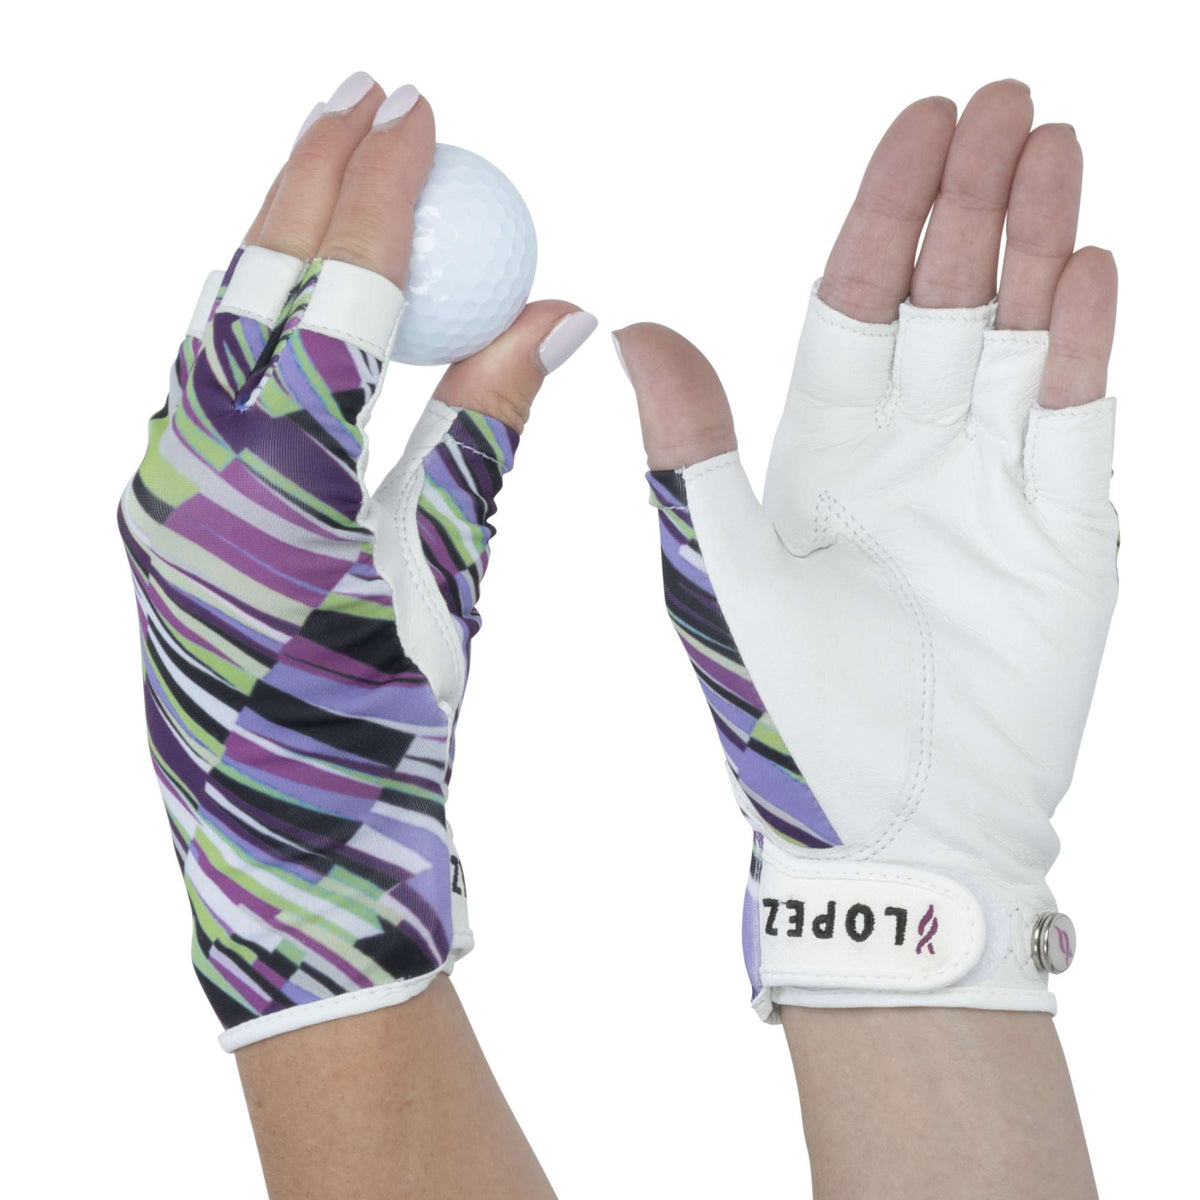 Biplut 1 Pair Women Gloves Half Finger Flip Fuzzy Solid Color